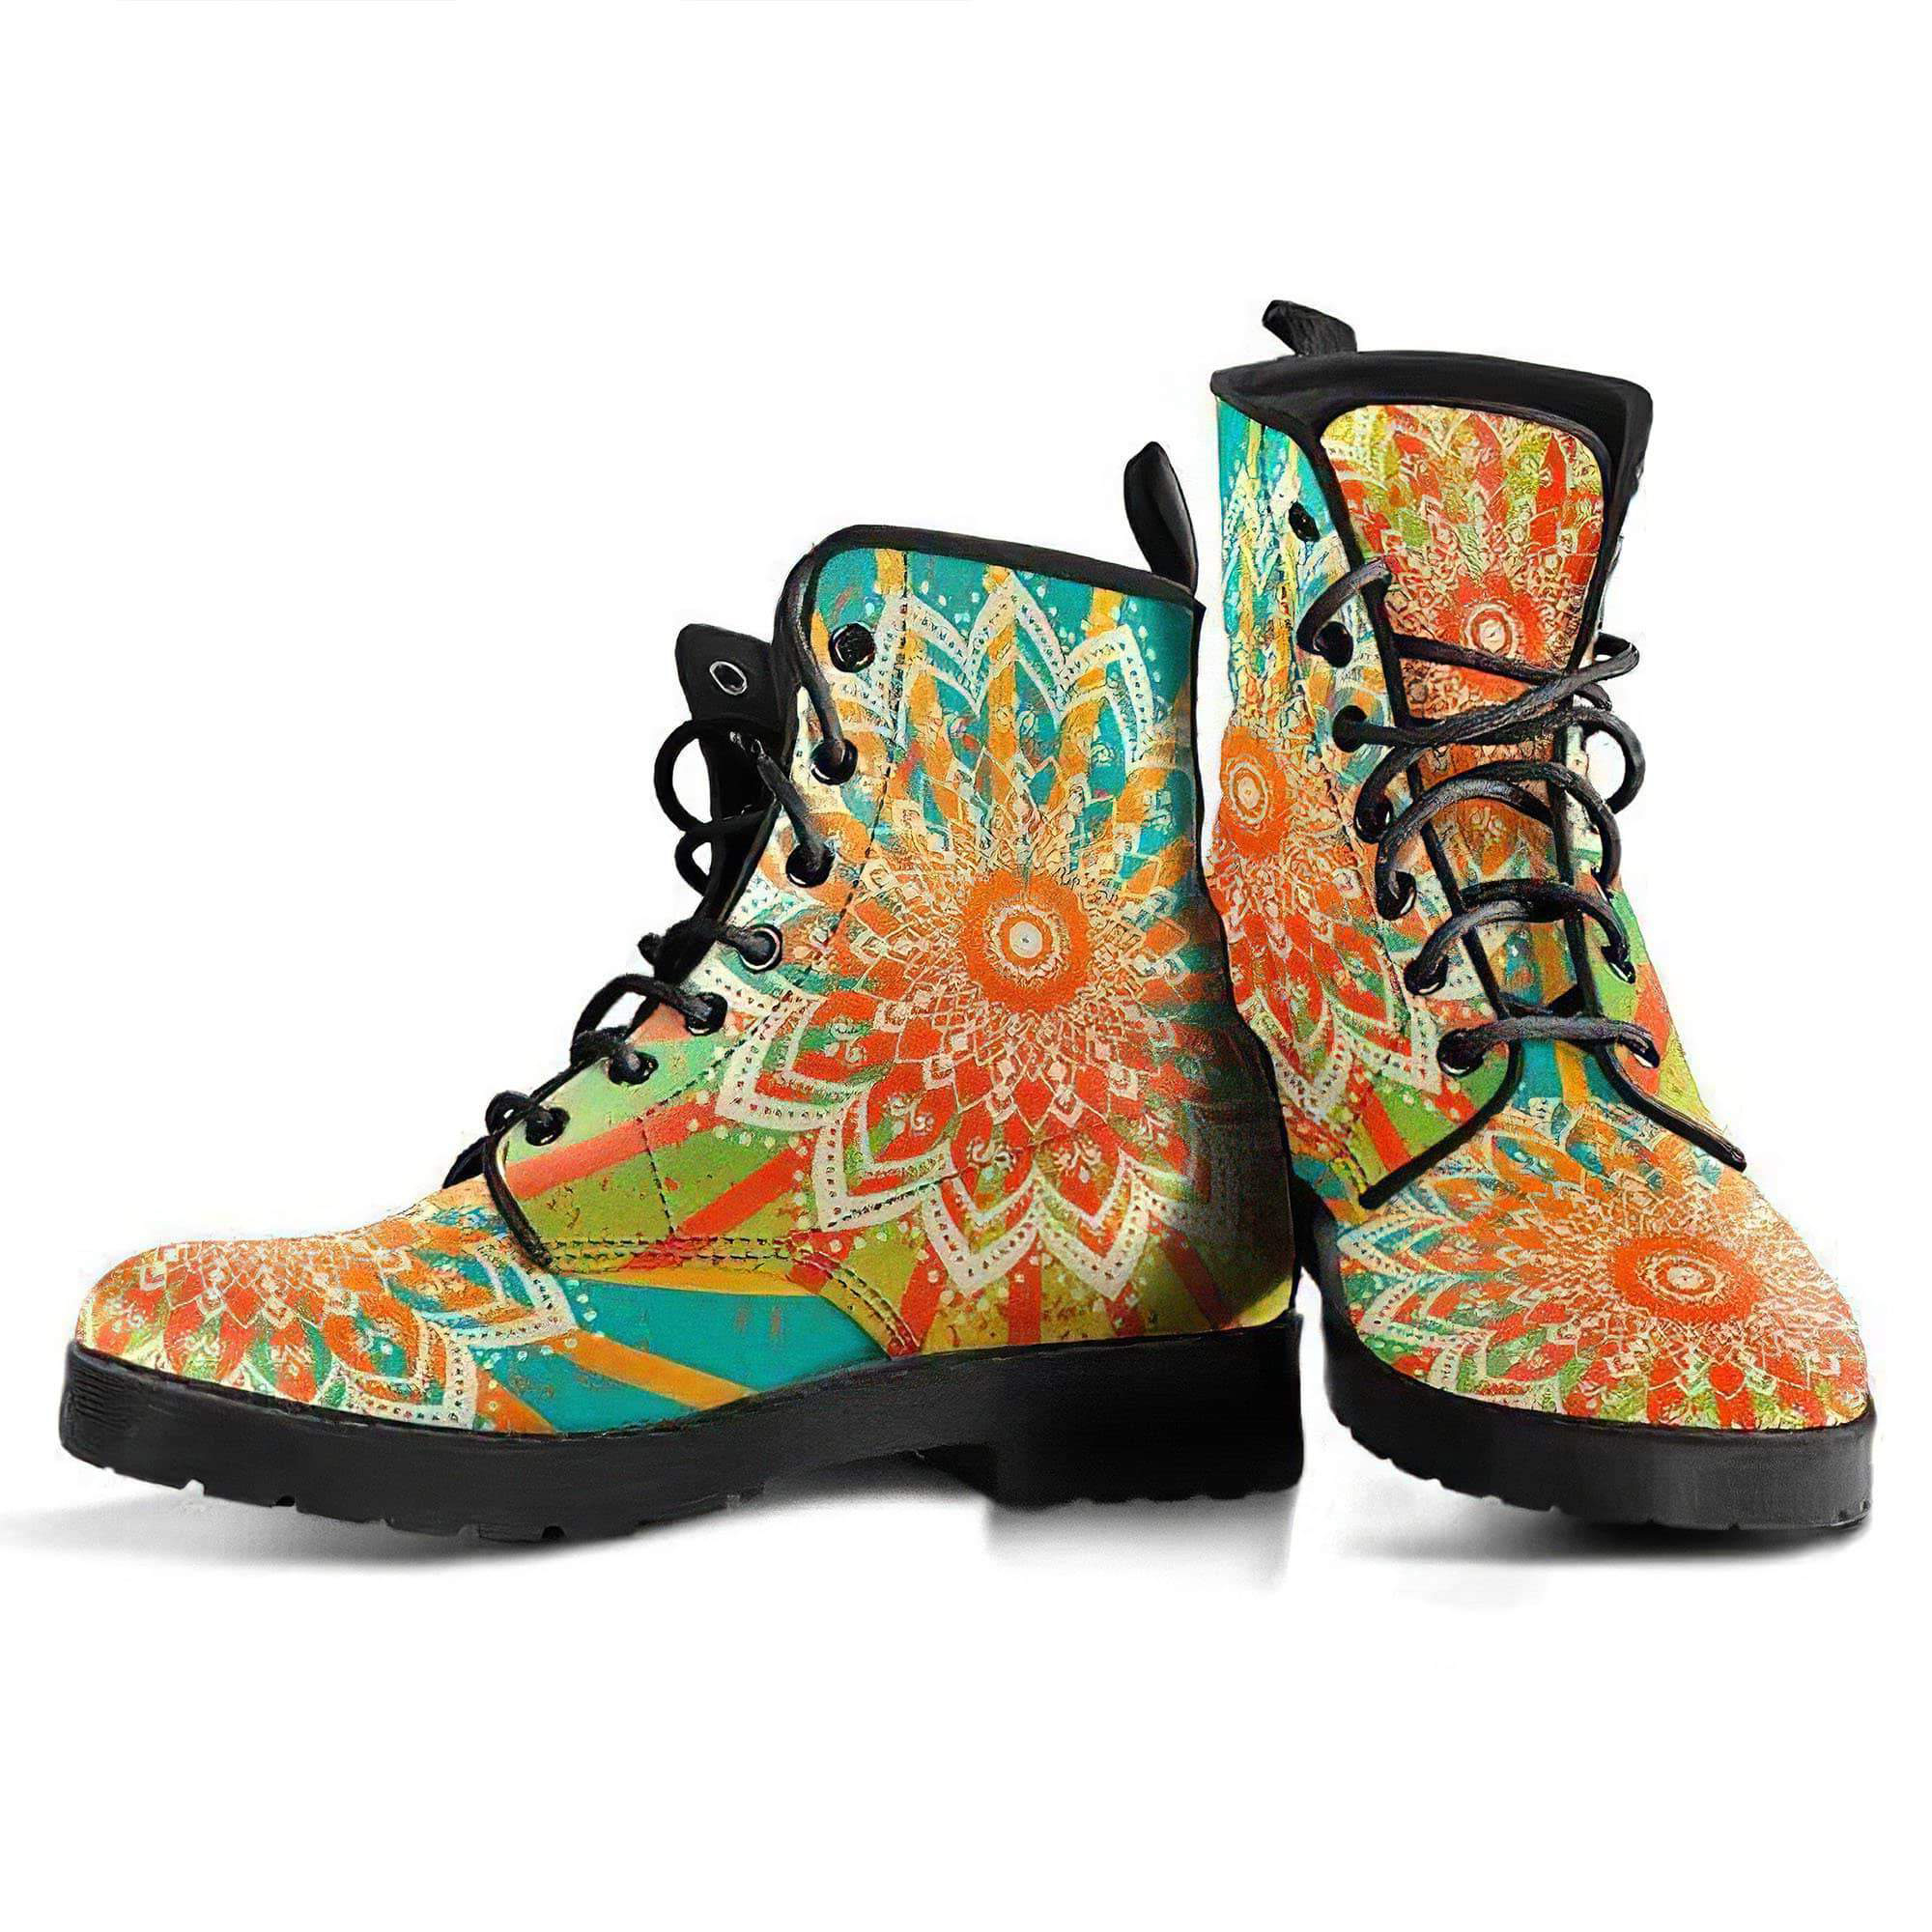 mandala-women-s-leather-boots-women-s-leather-boots-12051908886589.jpg